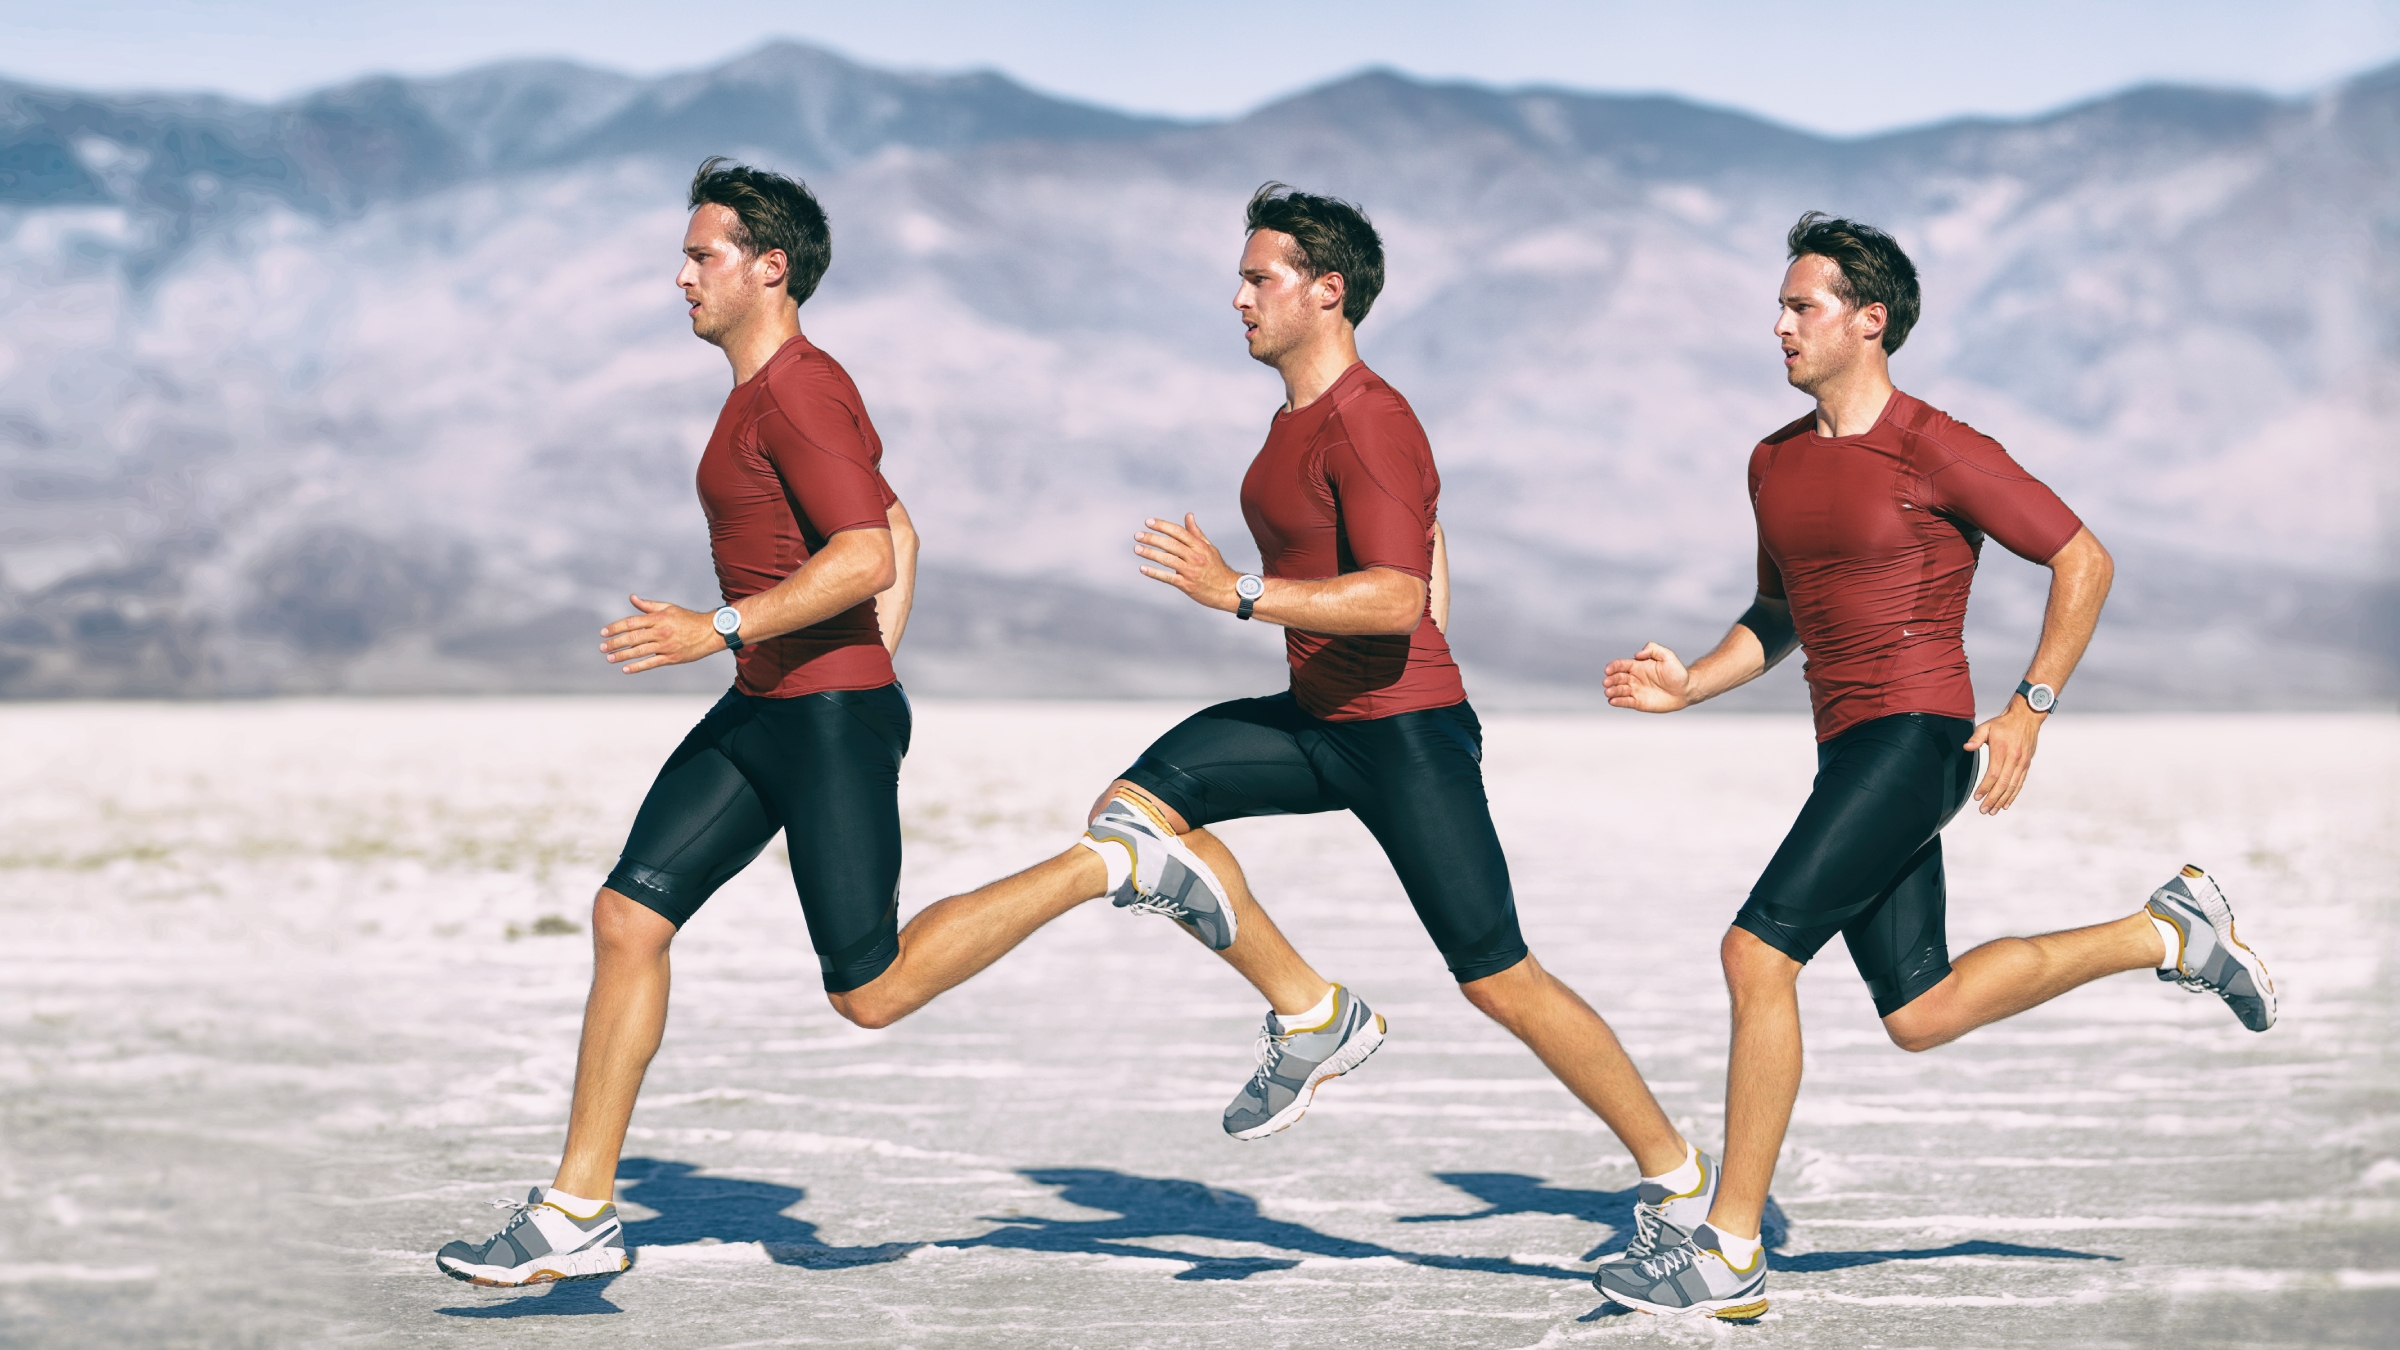 Proper Running Form: 8 Tips to Improve Running Technique